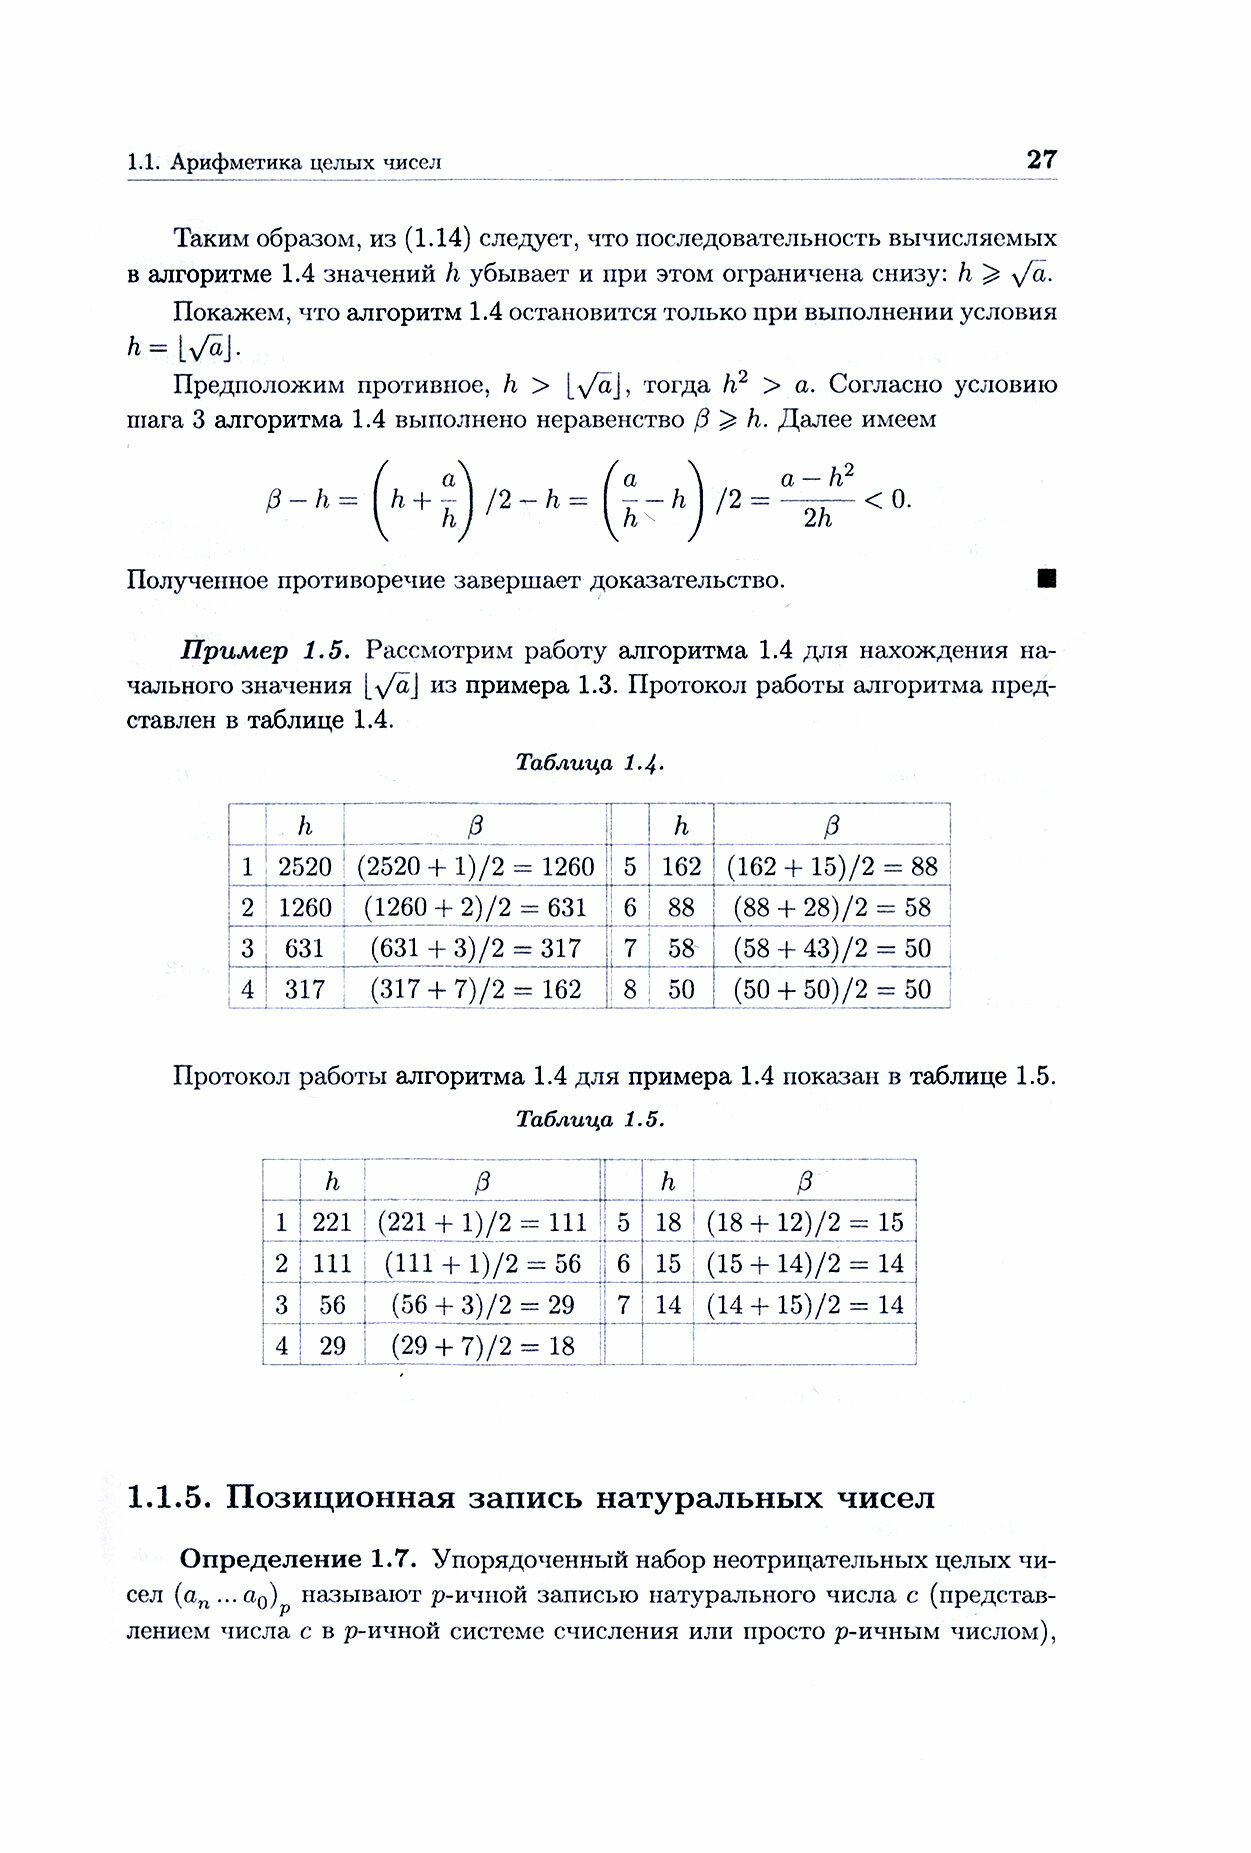 Дискретная математика и информатика учебник для вузов - фото №5